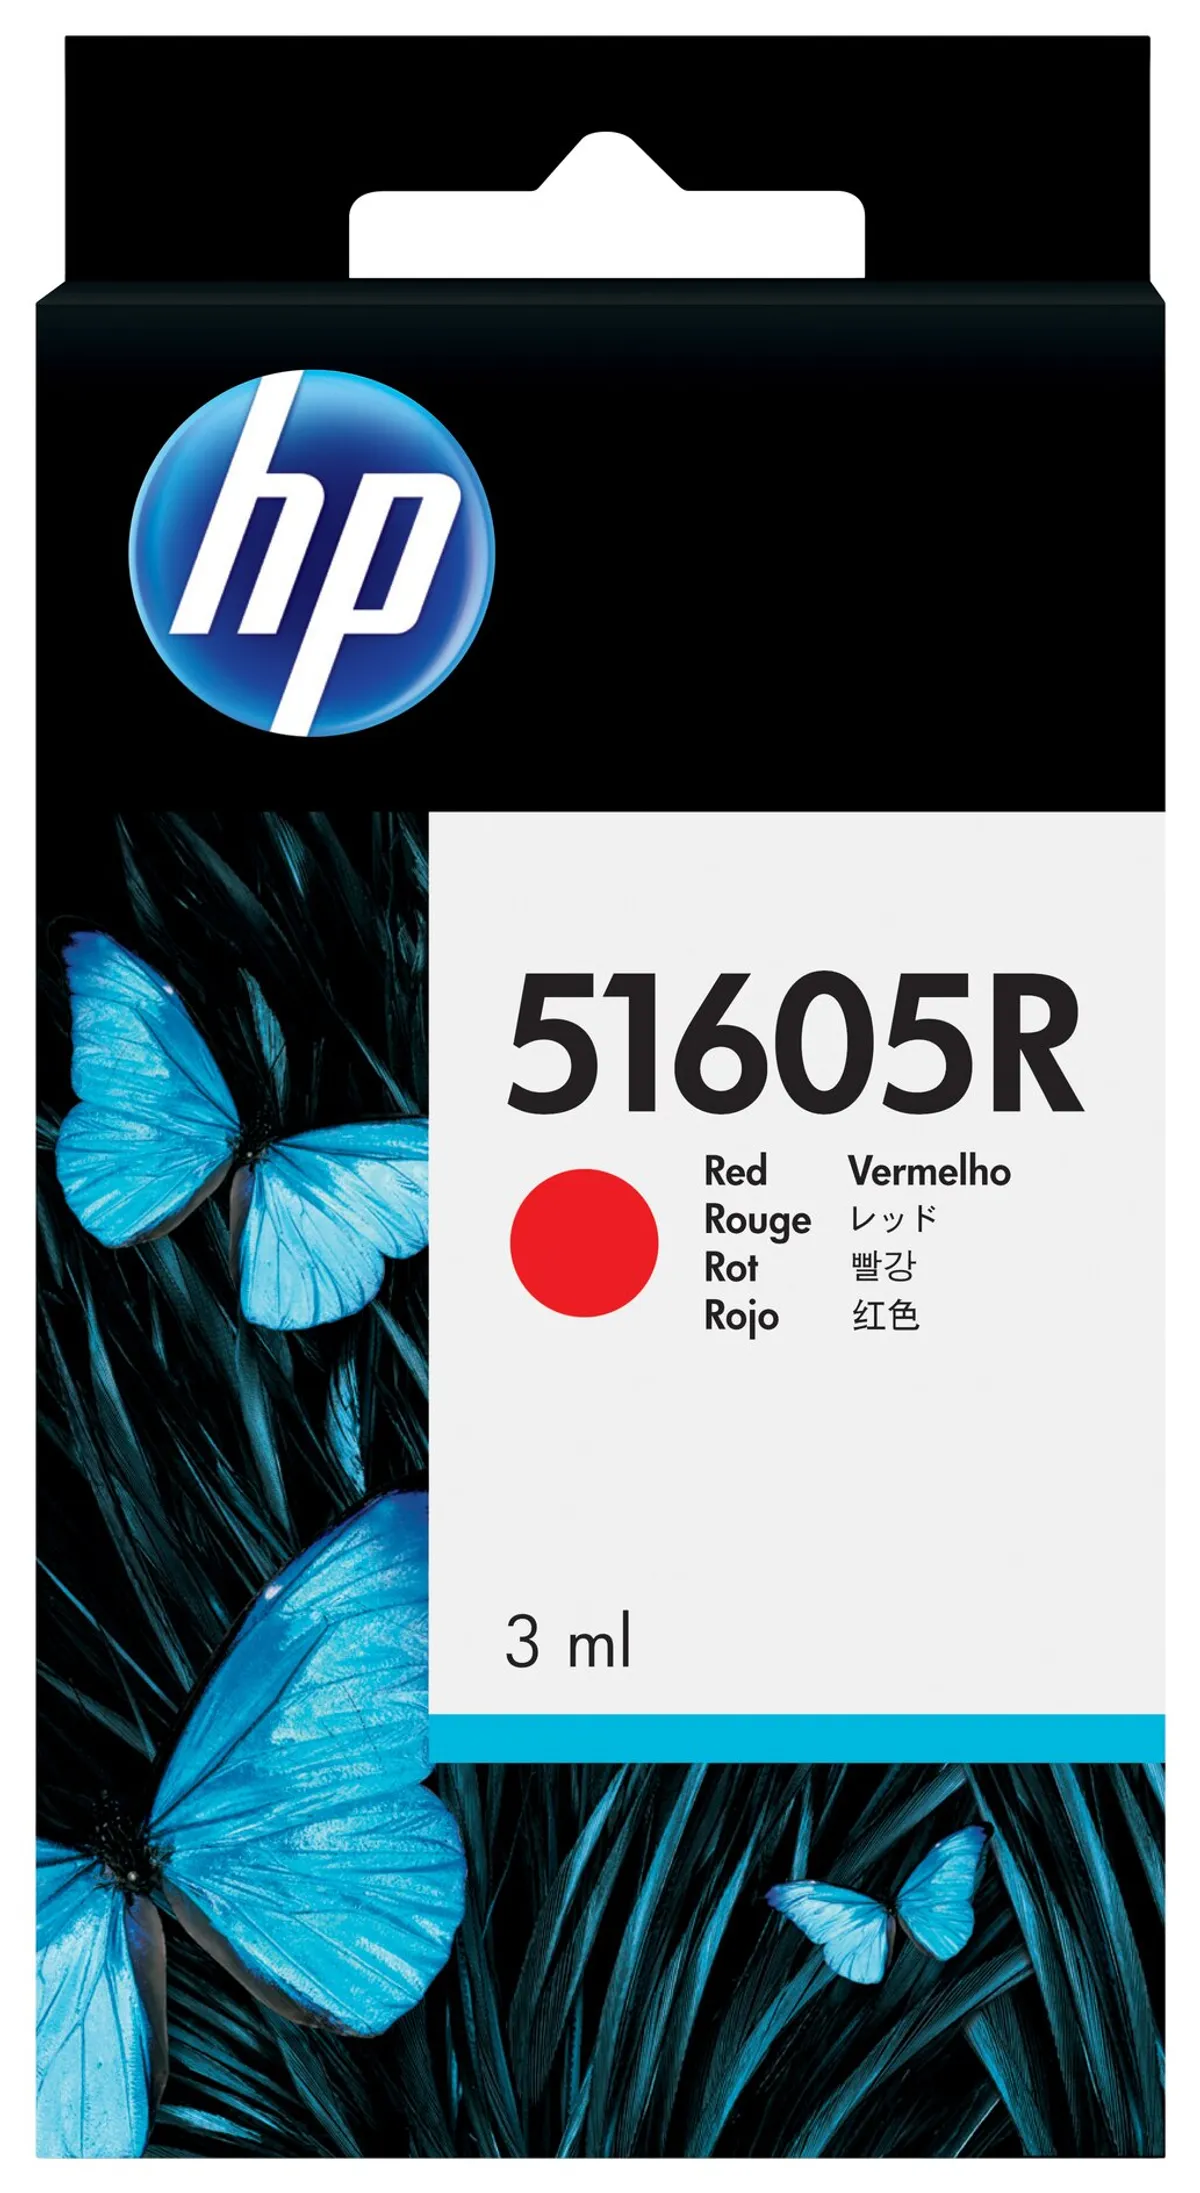 HP 51605R Tinte rot